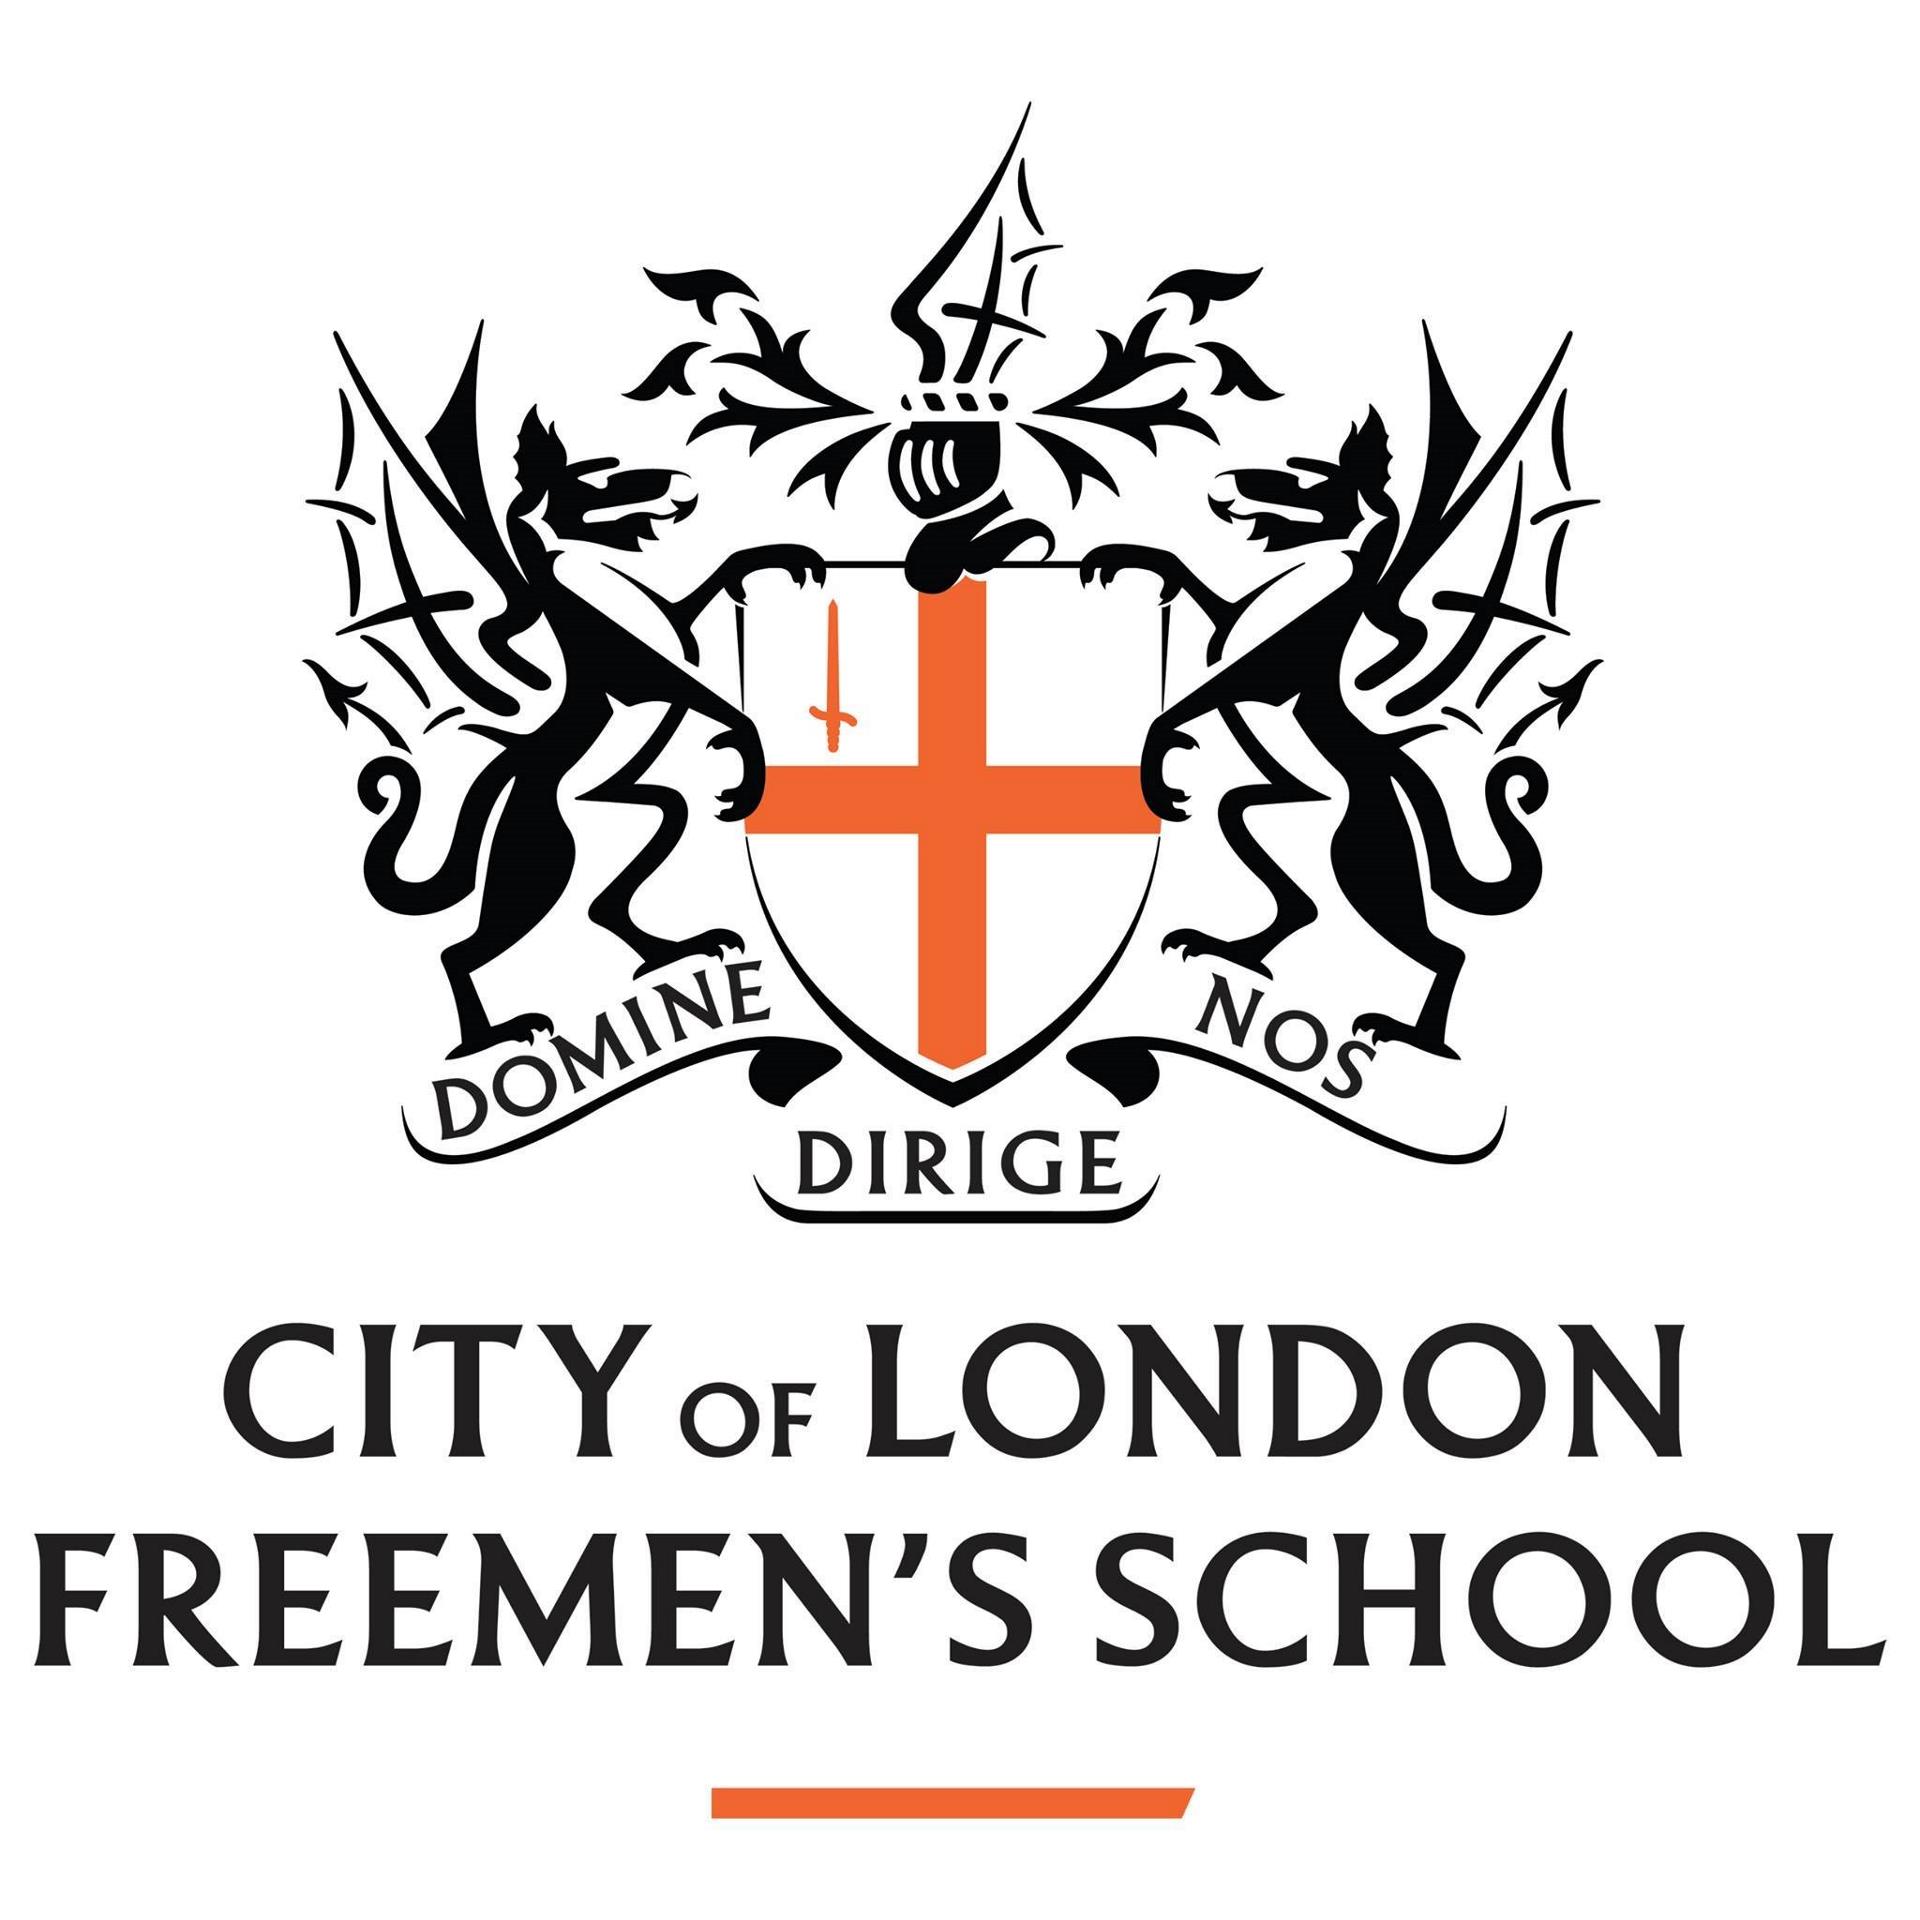 City of London, Freemen's School